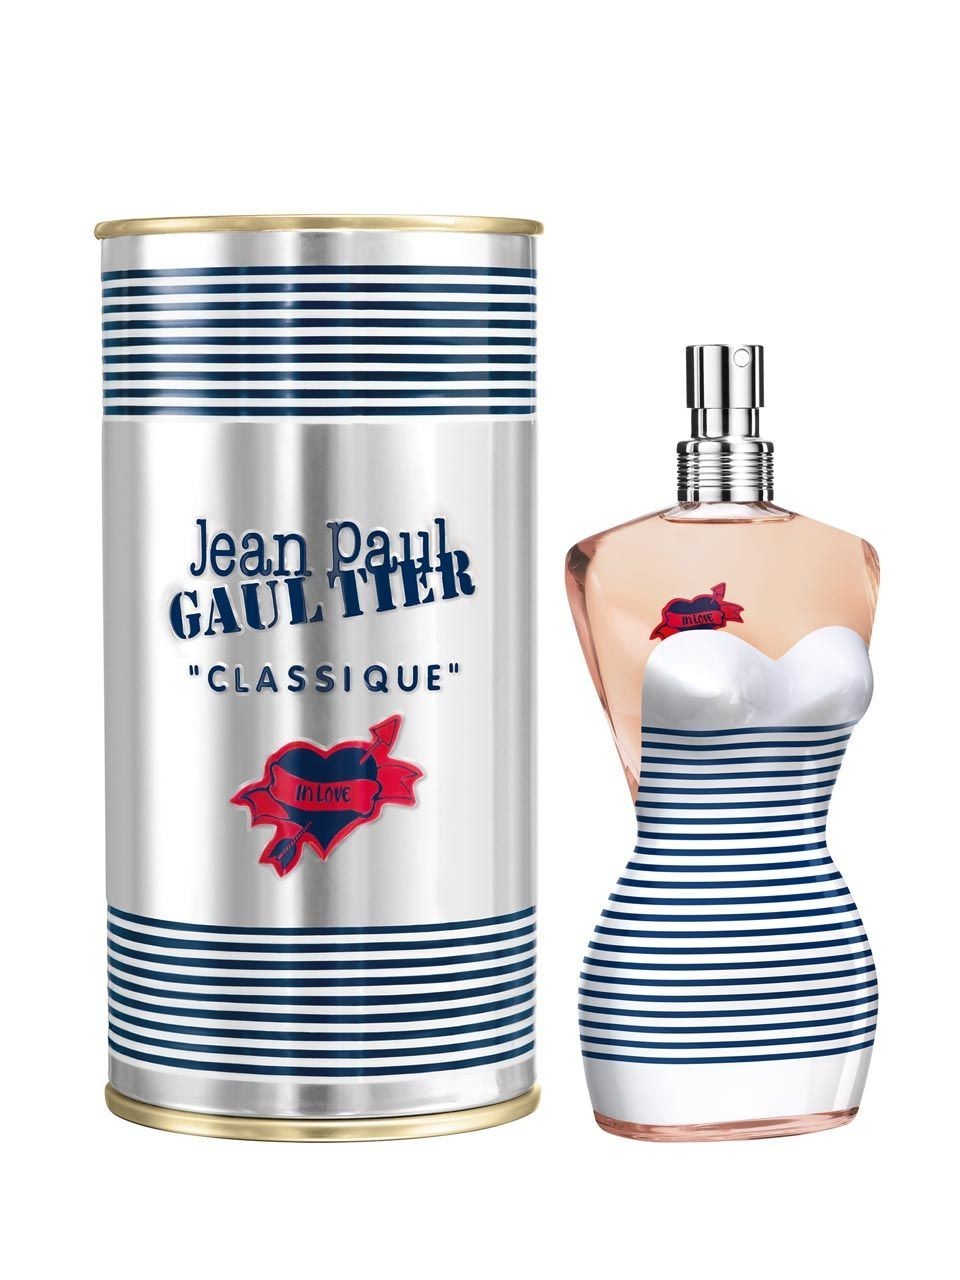 Jean Paul Gaultier Classique Limited Edition duo 2013